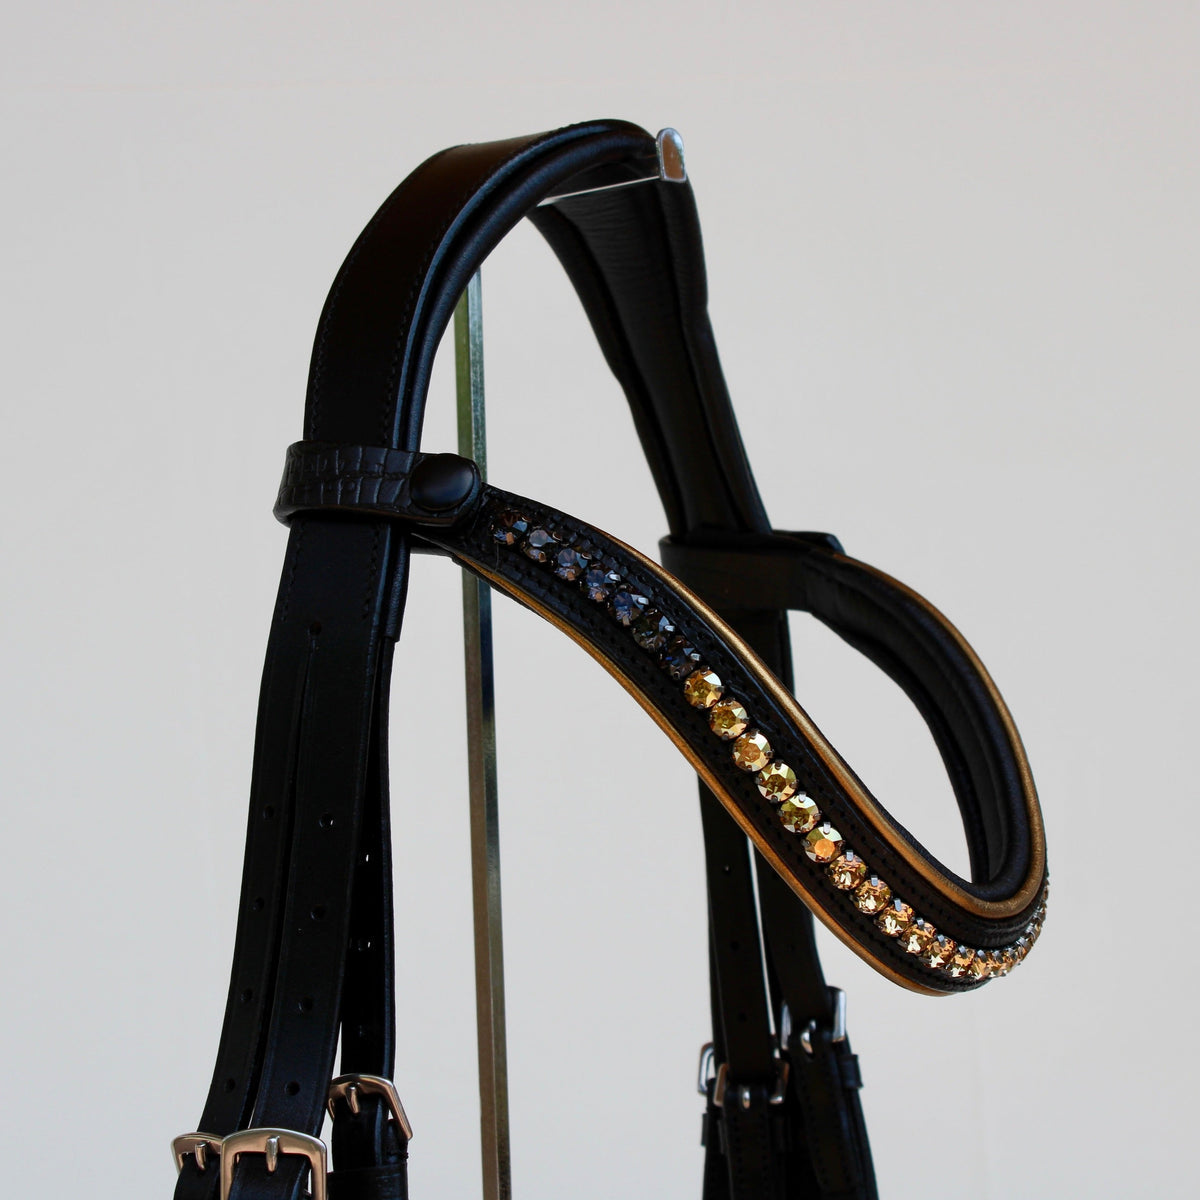 The Pharoah Black Leather Double Bridle